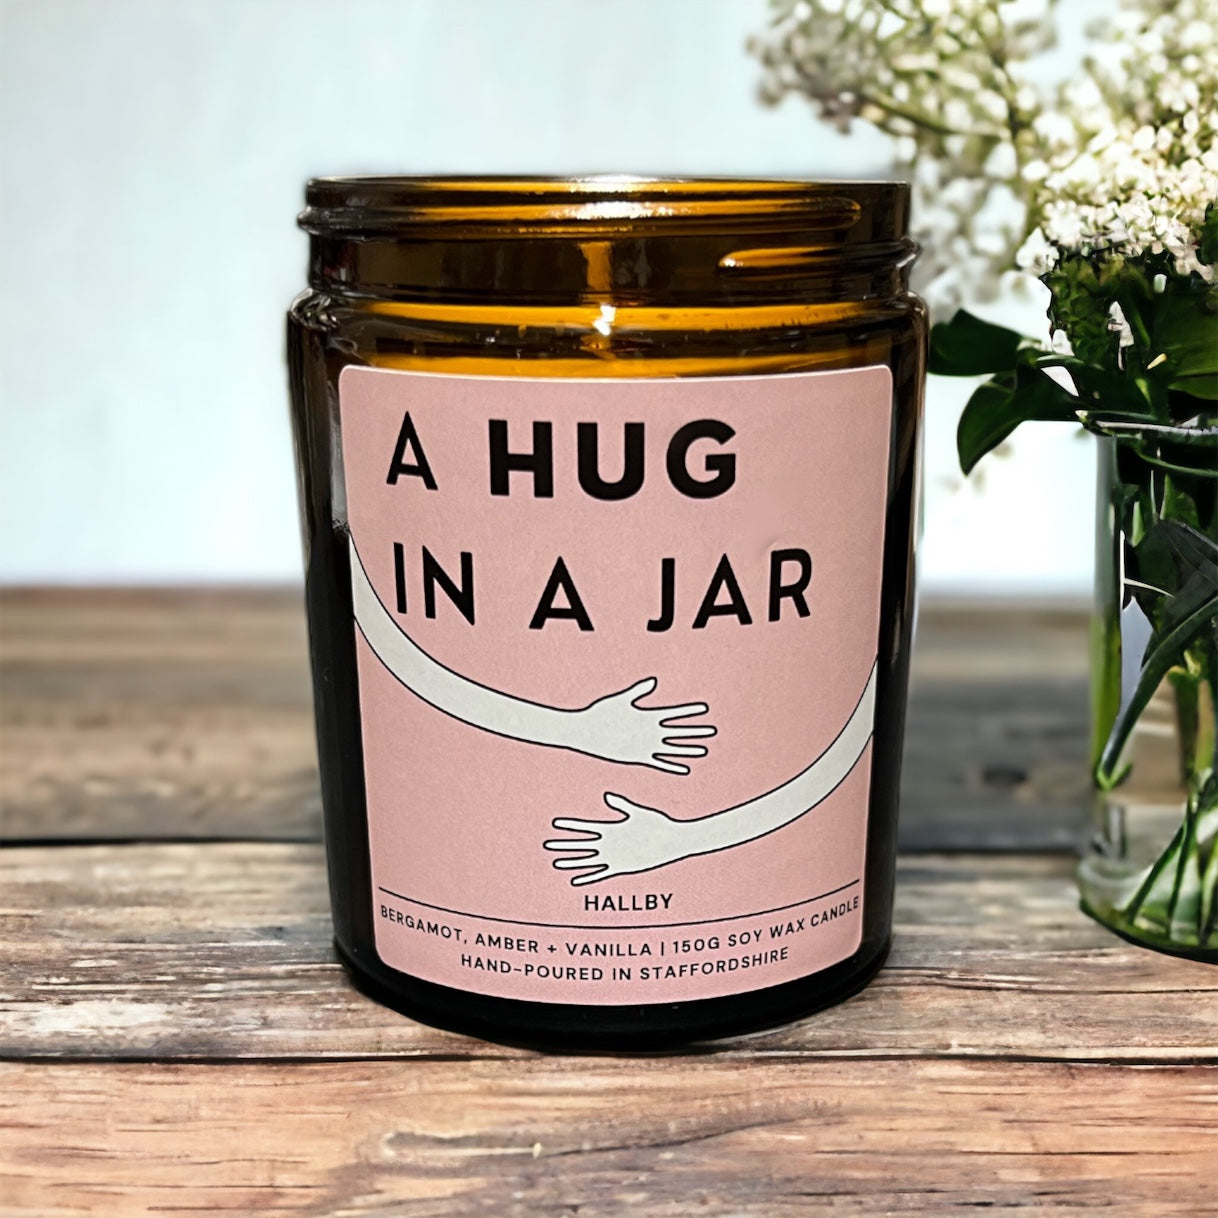 Hug in a jar